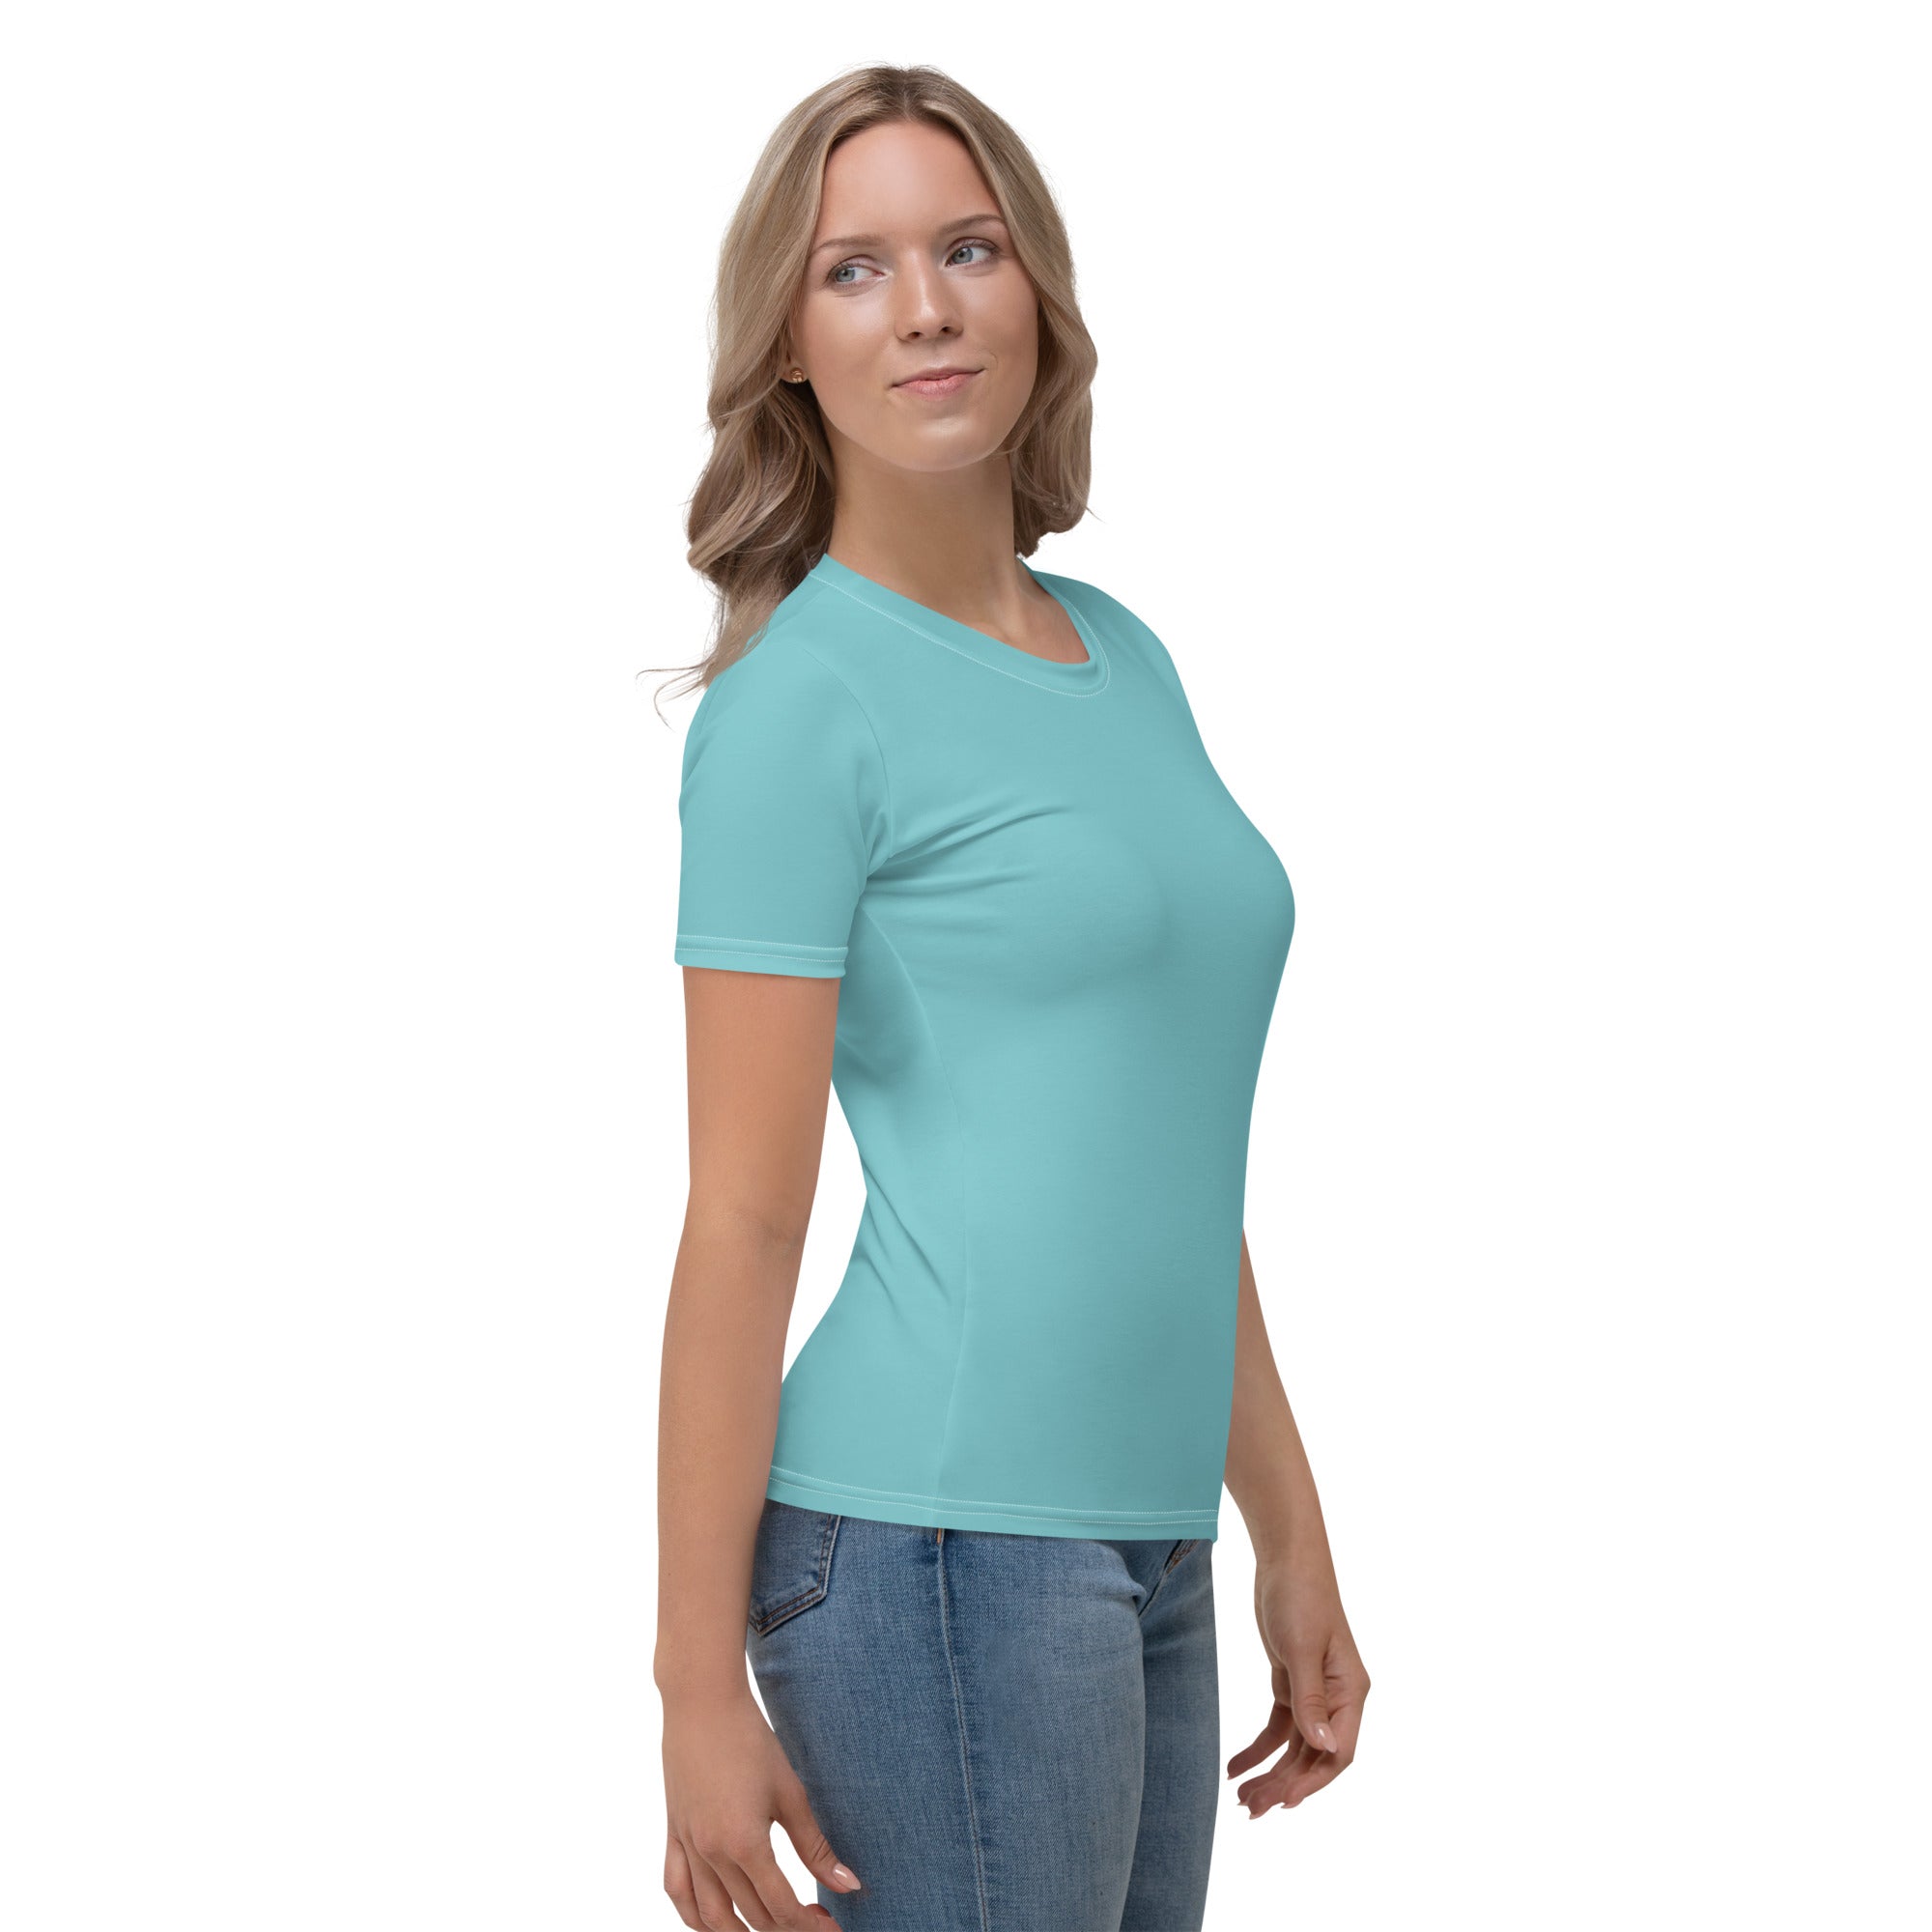 Turquoise T-shirt